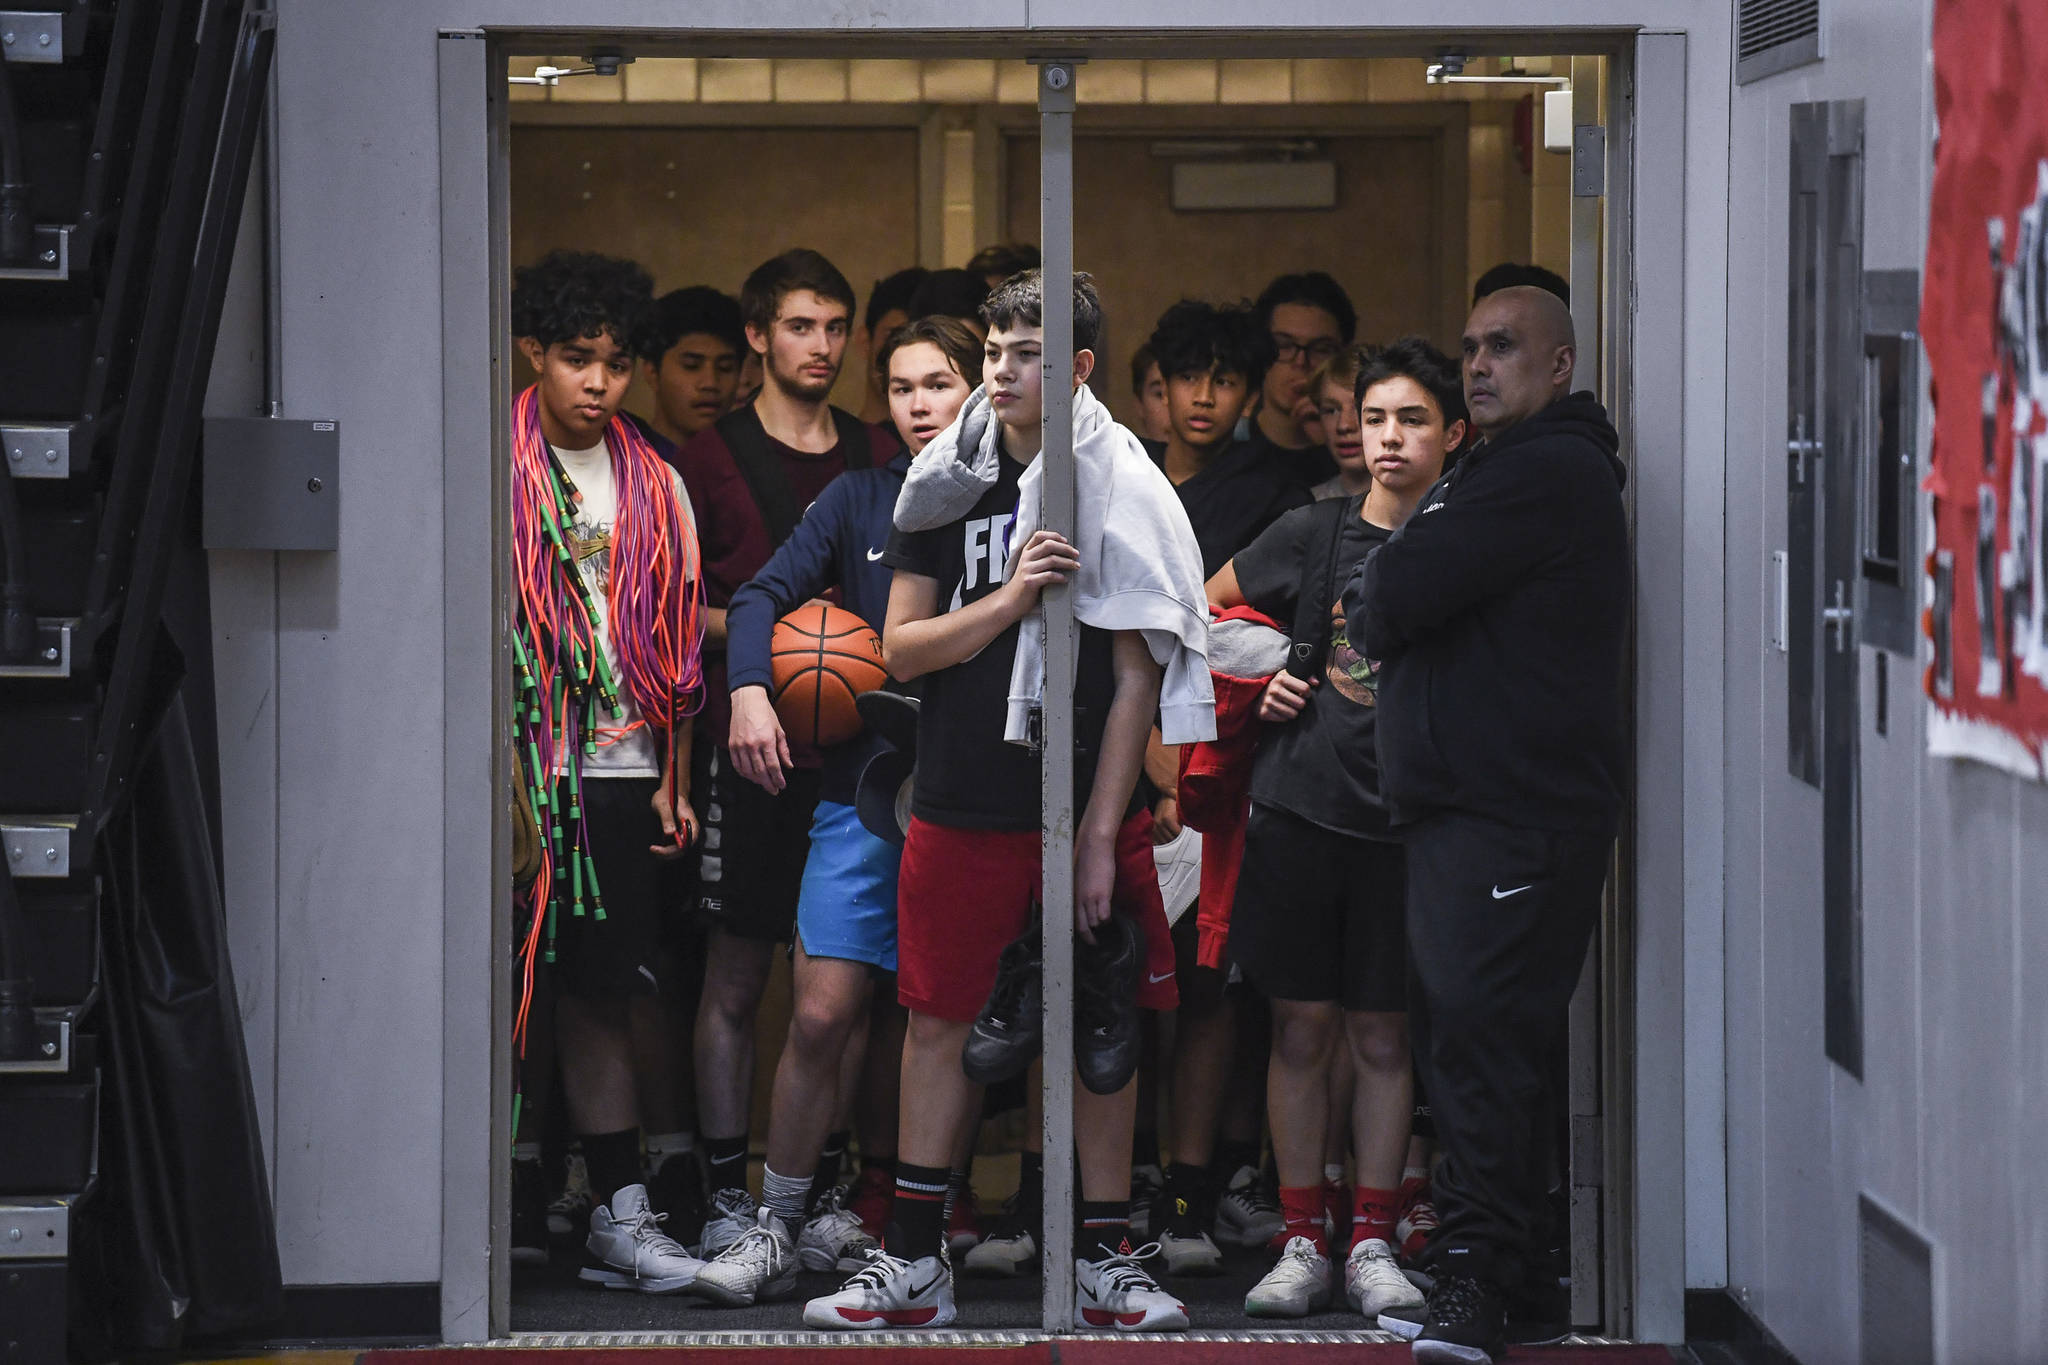 The boys junior varsity basketball team waits for their time on the court as the girls varsity basketball team finishes their practice at Juneau-Douglas High School: Yadaa.at Kalé on Monday, Dec. 9, 2019. (Michael Penn | Juneau Empire)